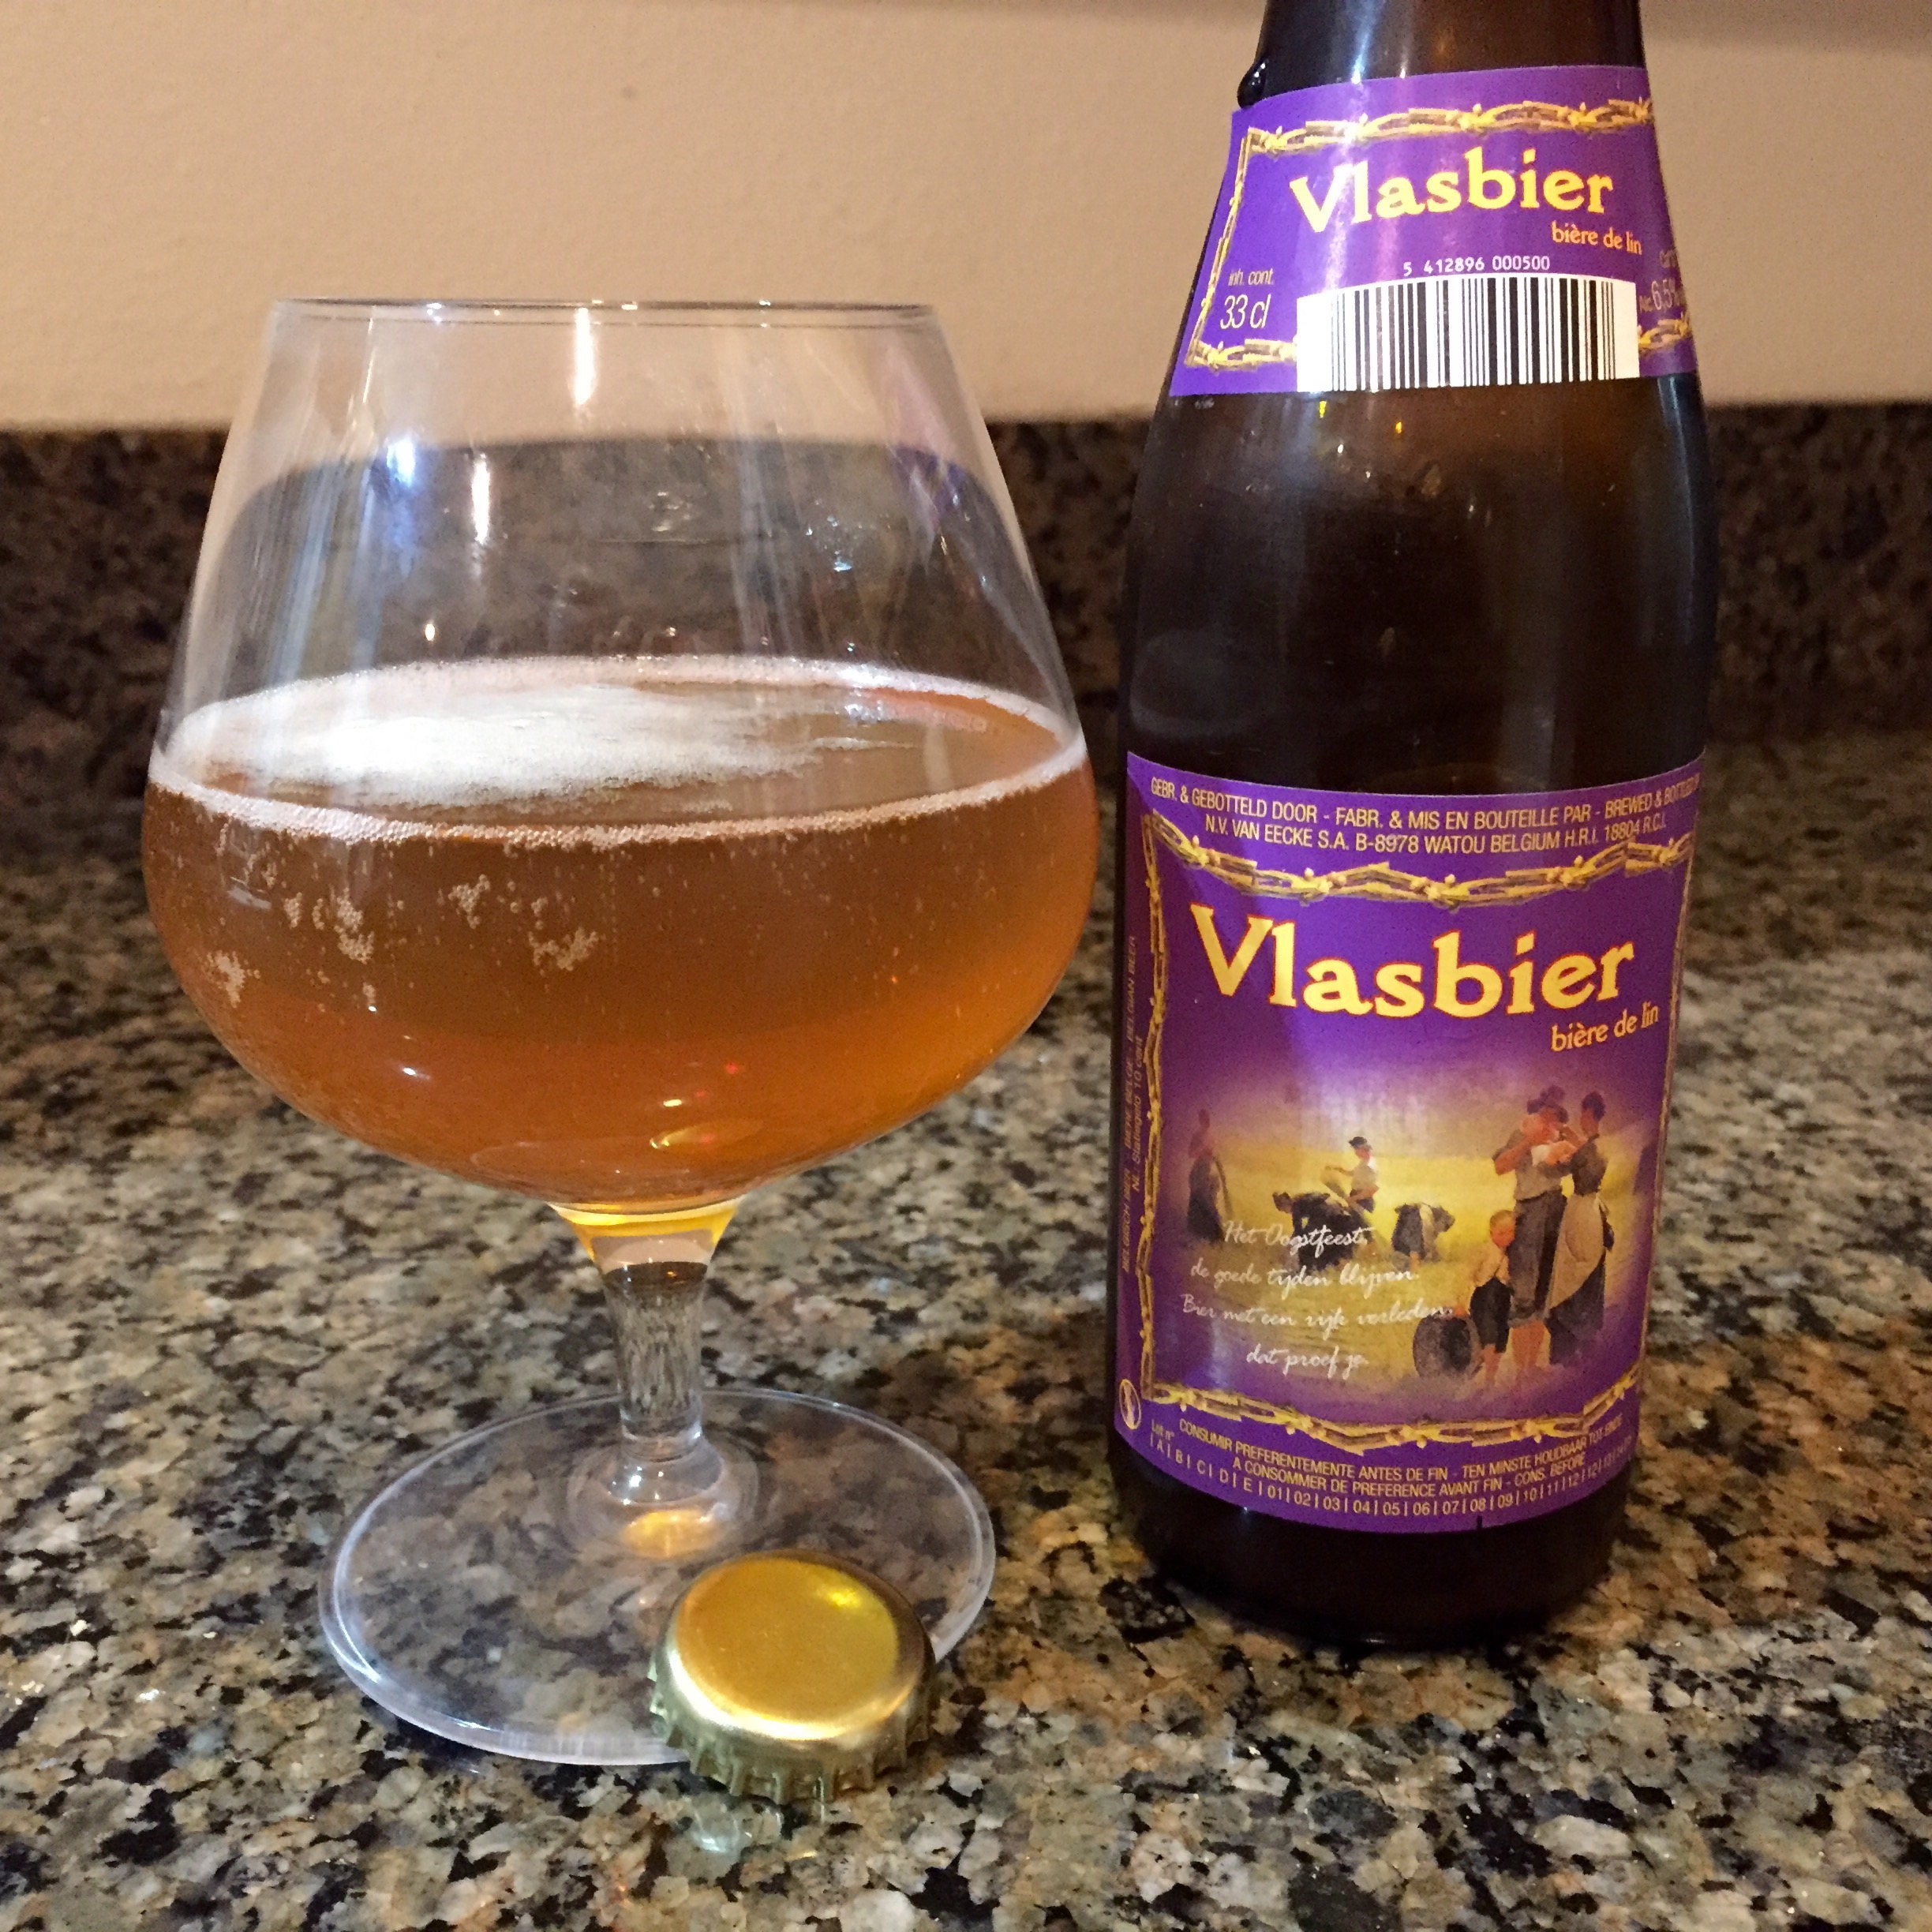 Vlasbier – biere de lin by Brouwerij Van Eecke N.V.